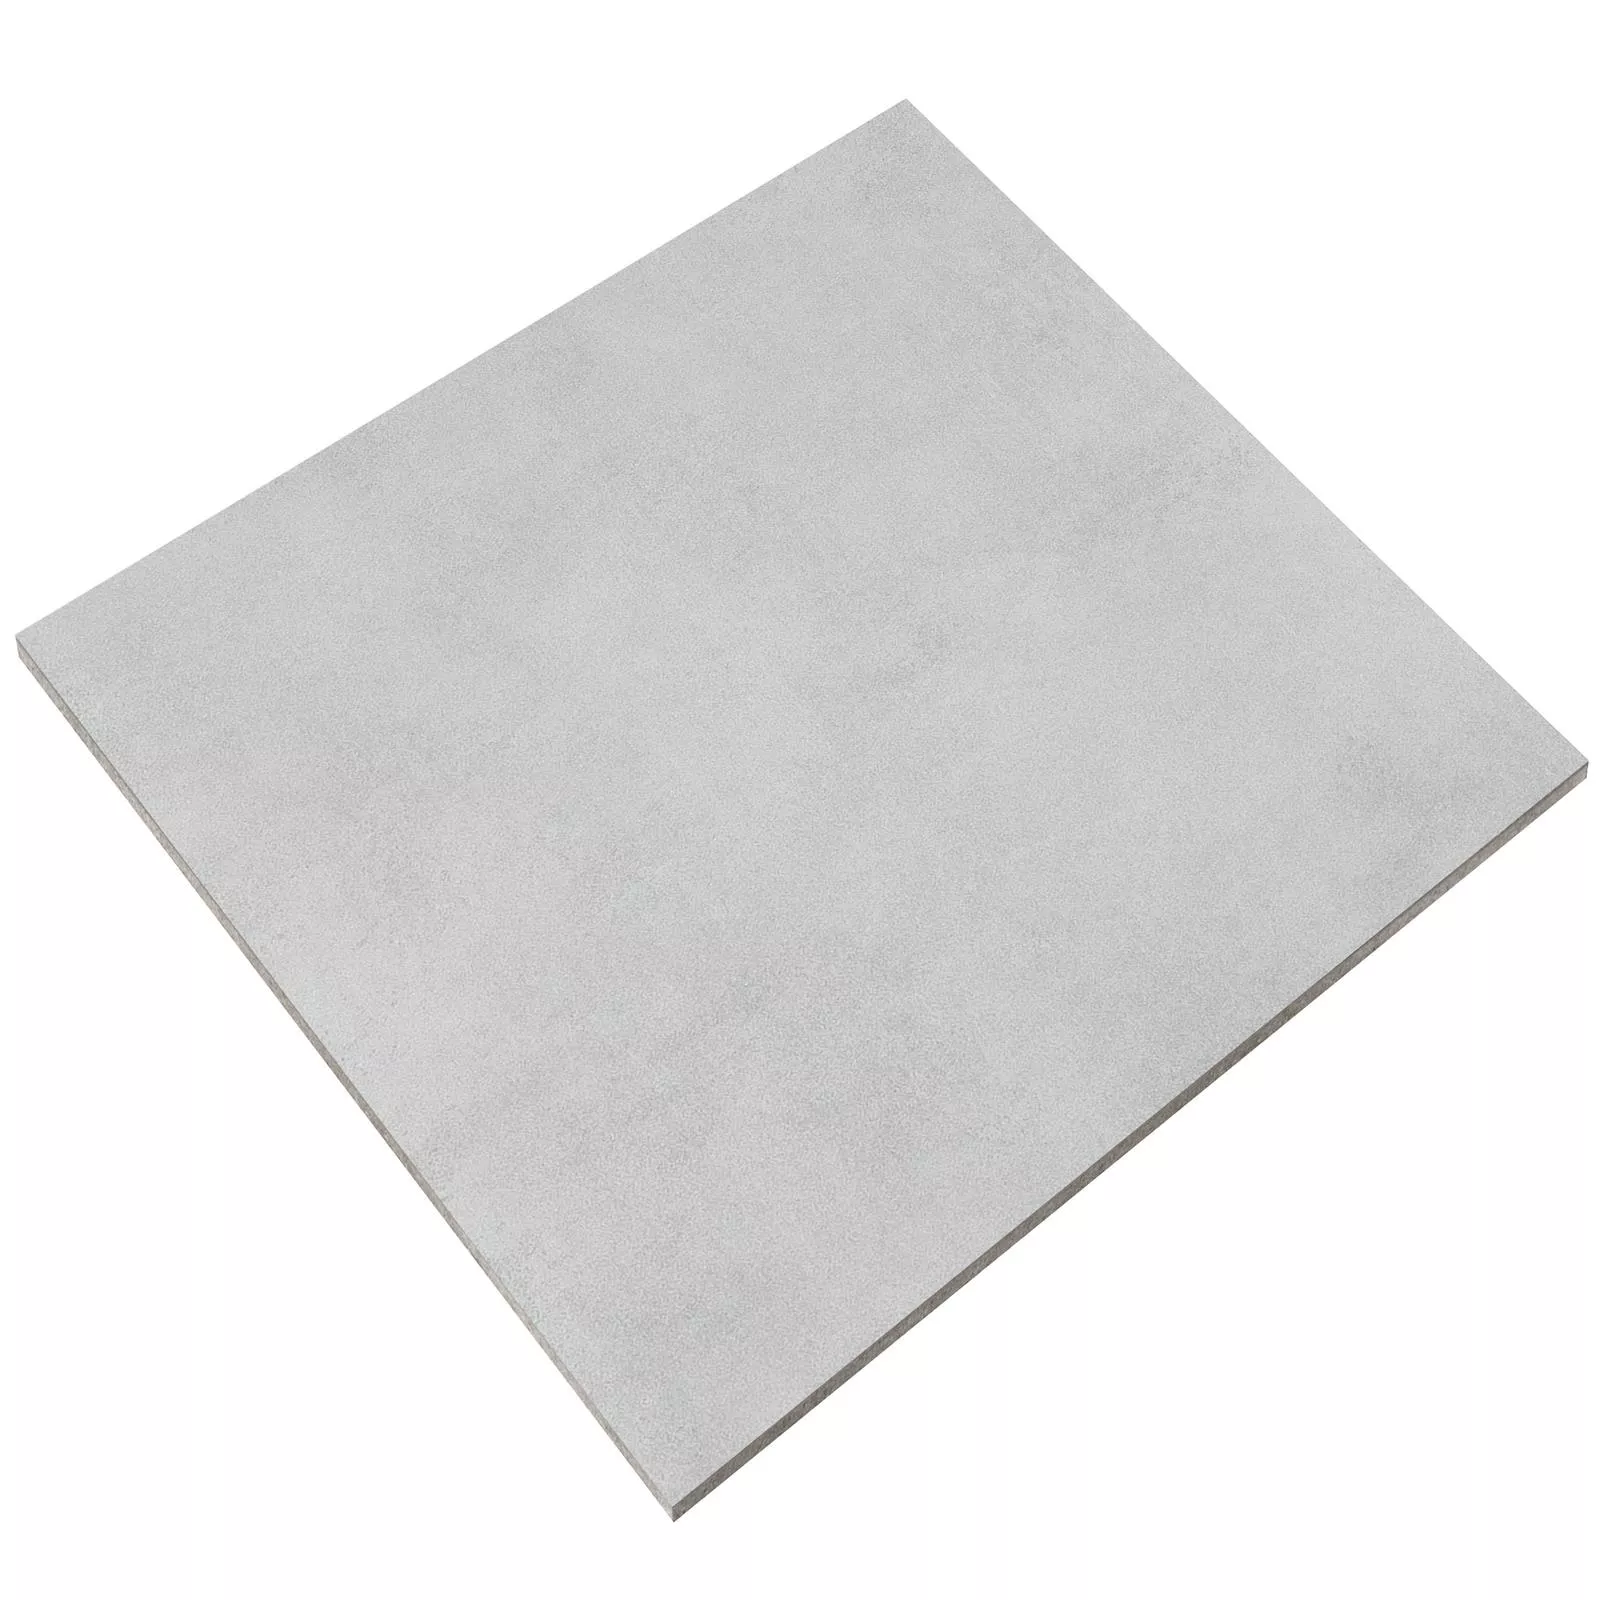 Sample Floor Tiles Mainland Beton Optic Polished 60x60cm Grey